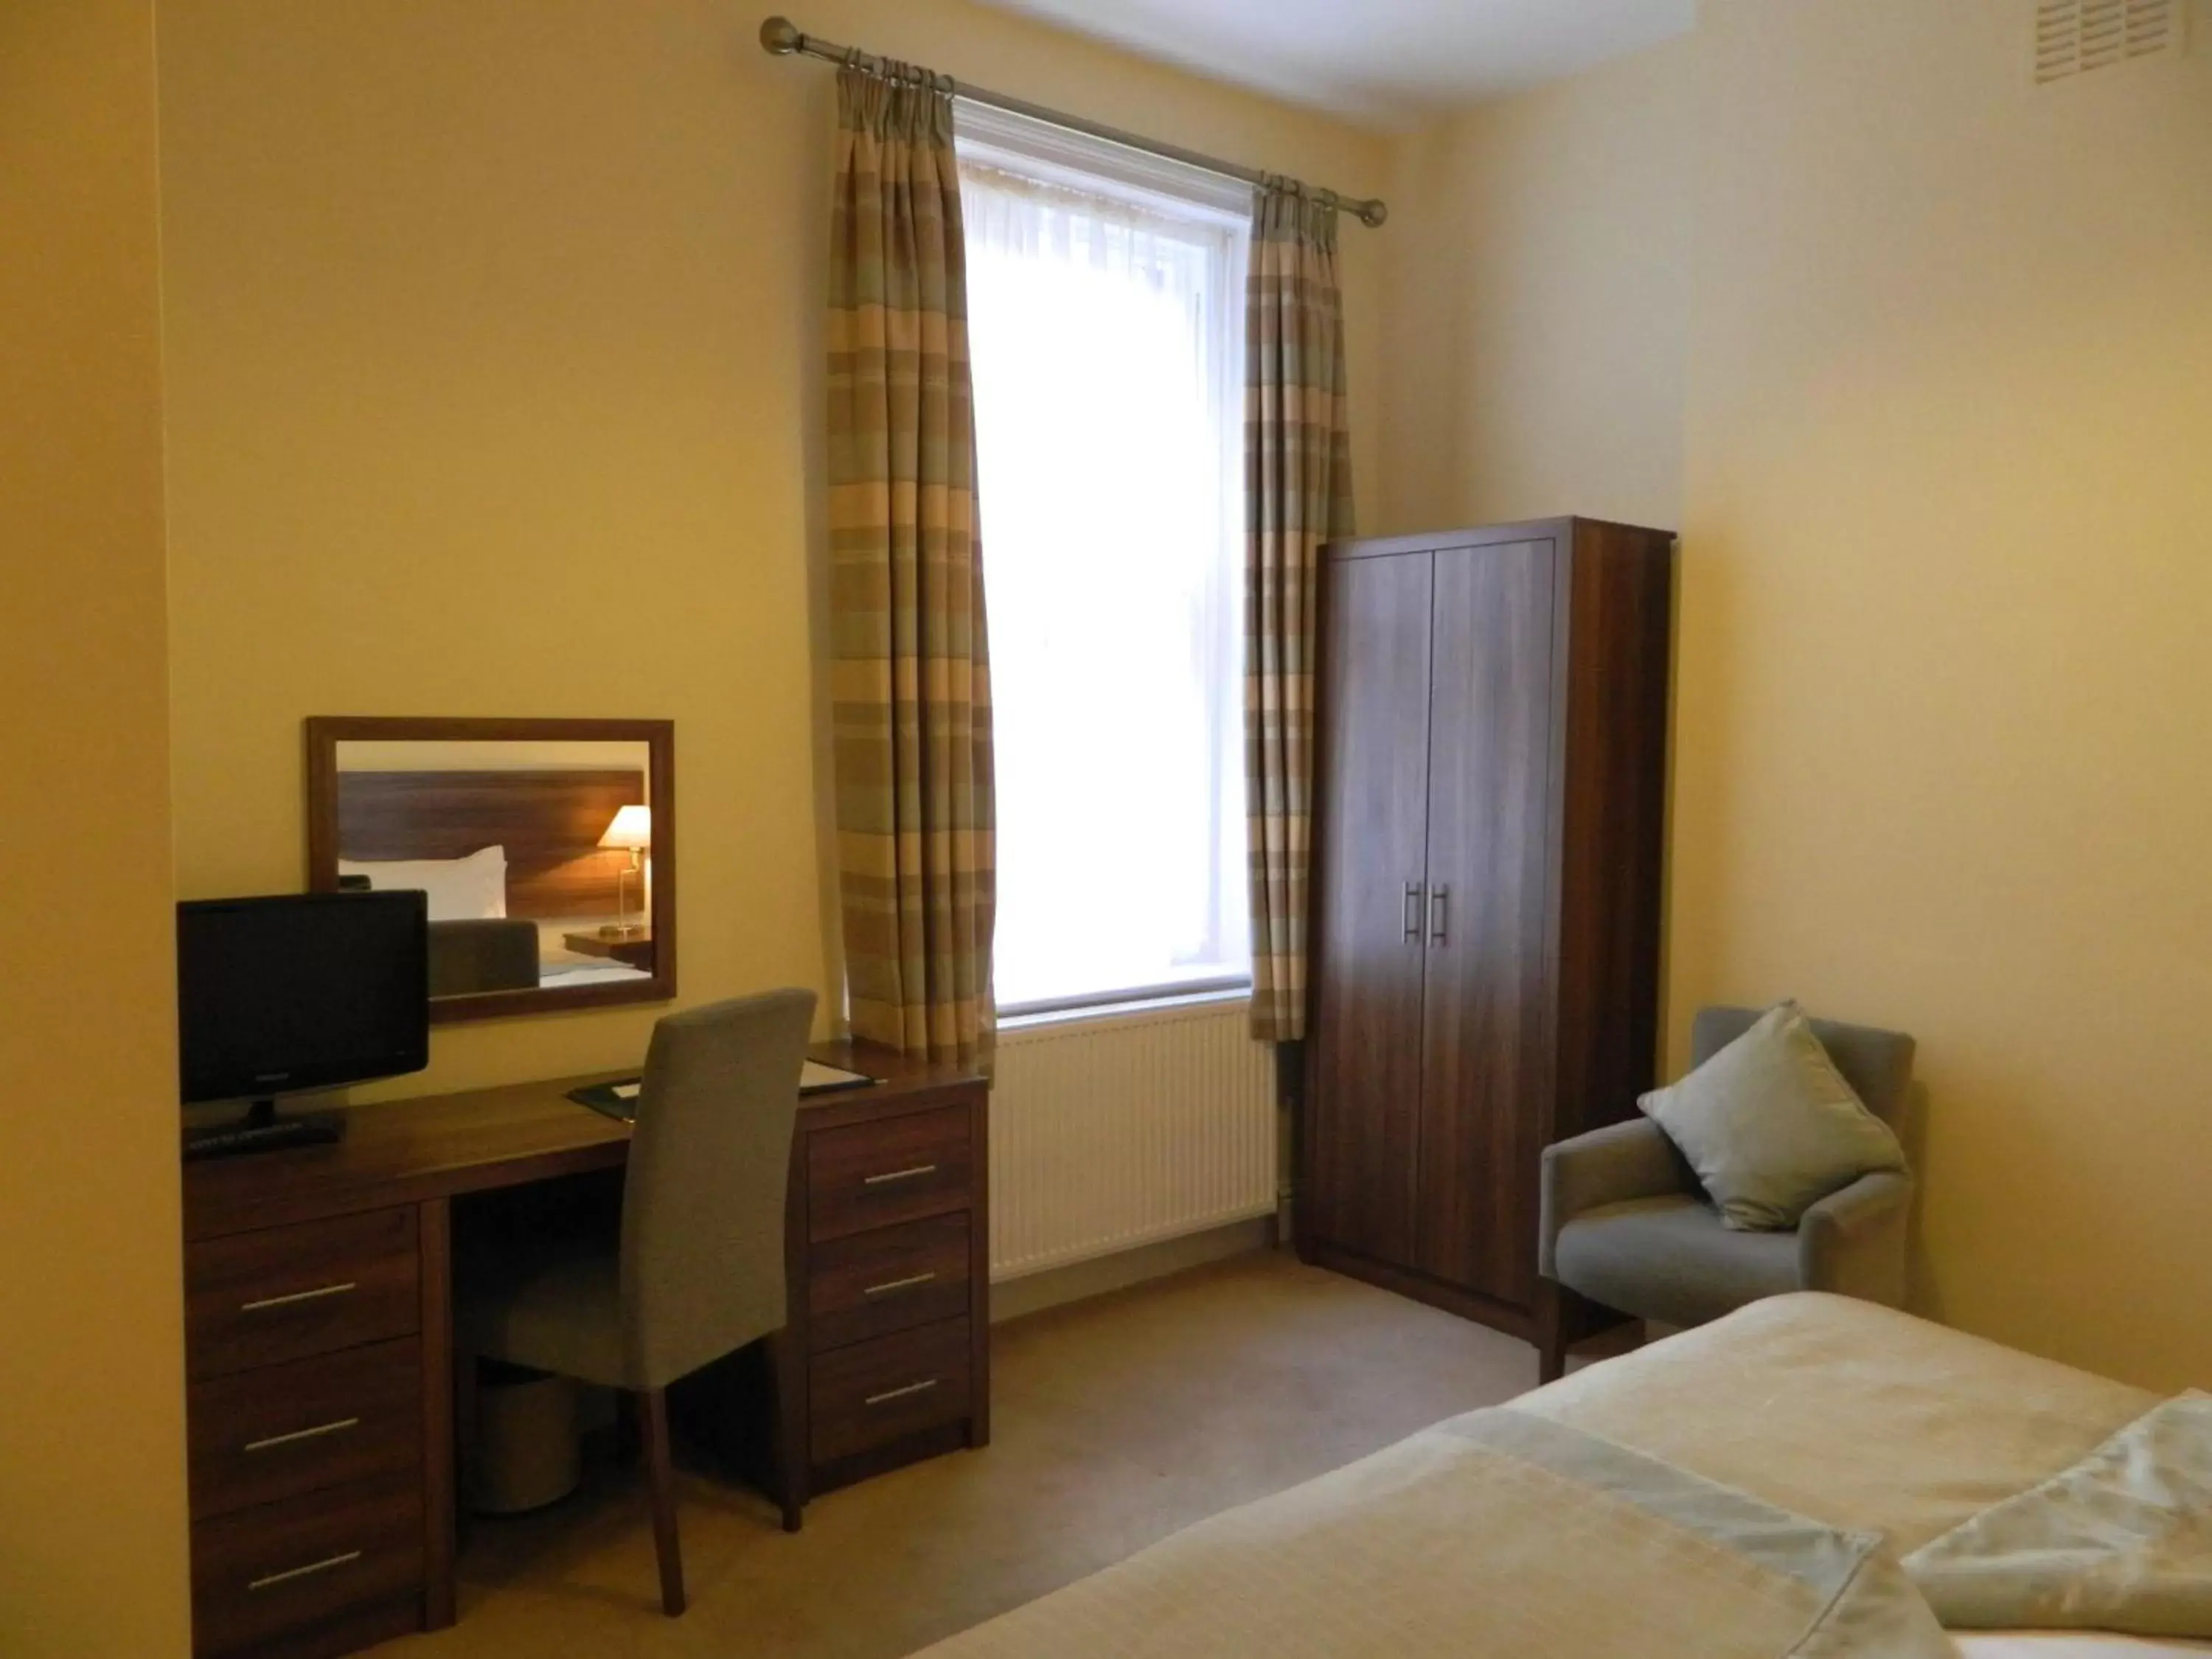 Bedroom, Room Photo in Weston Hotel